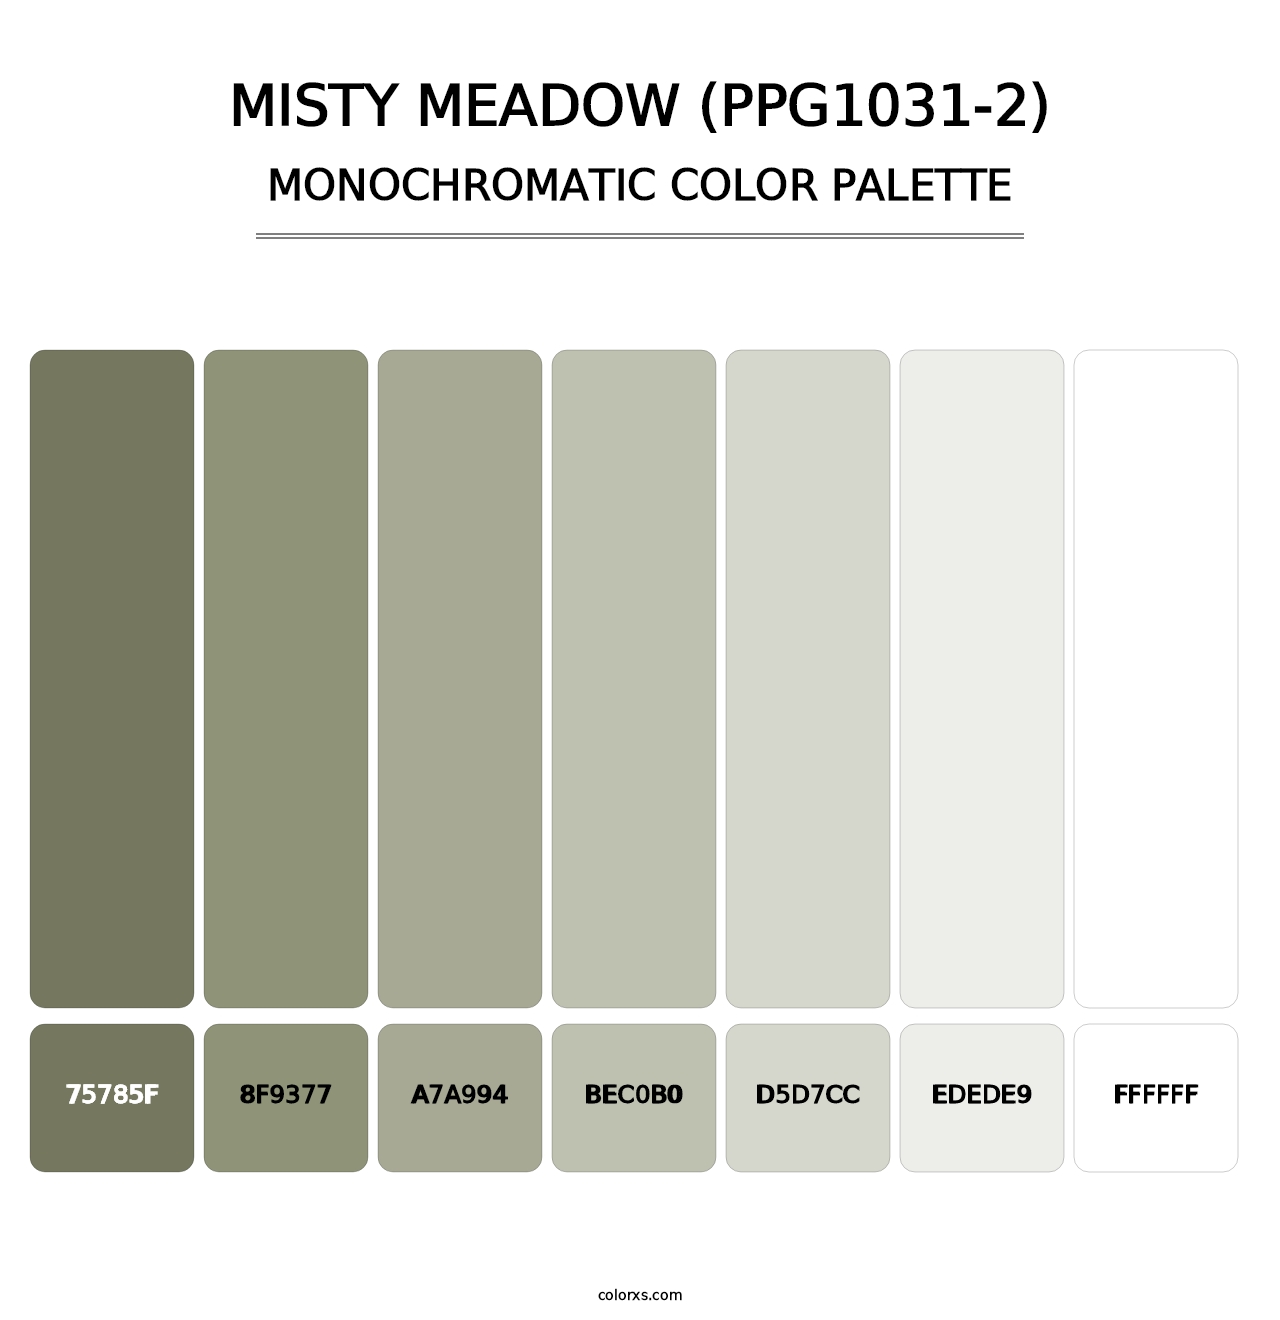 Misty Meadow (PPG1031-2) - Monochromatic Color Palette